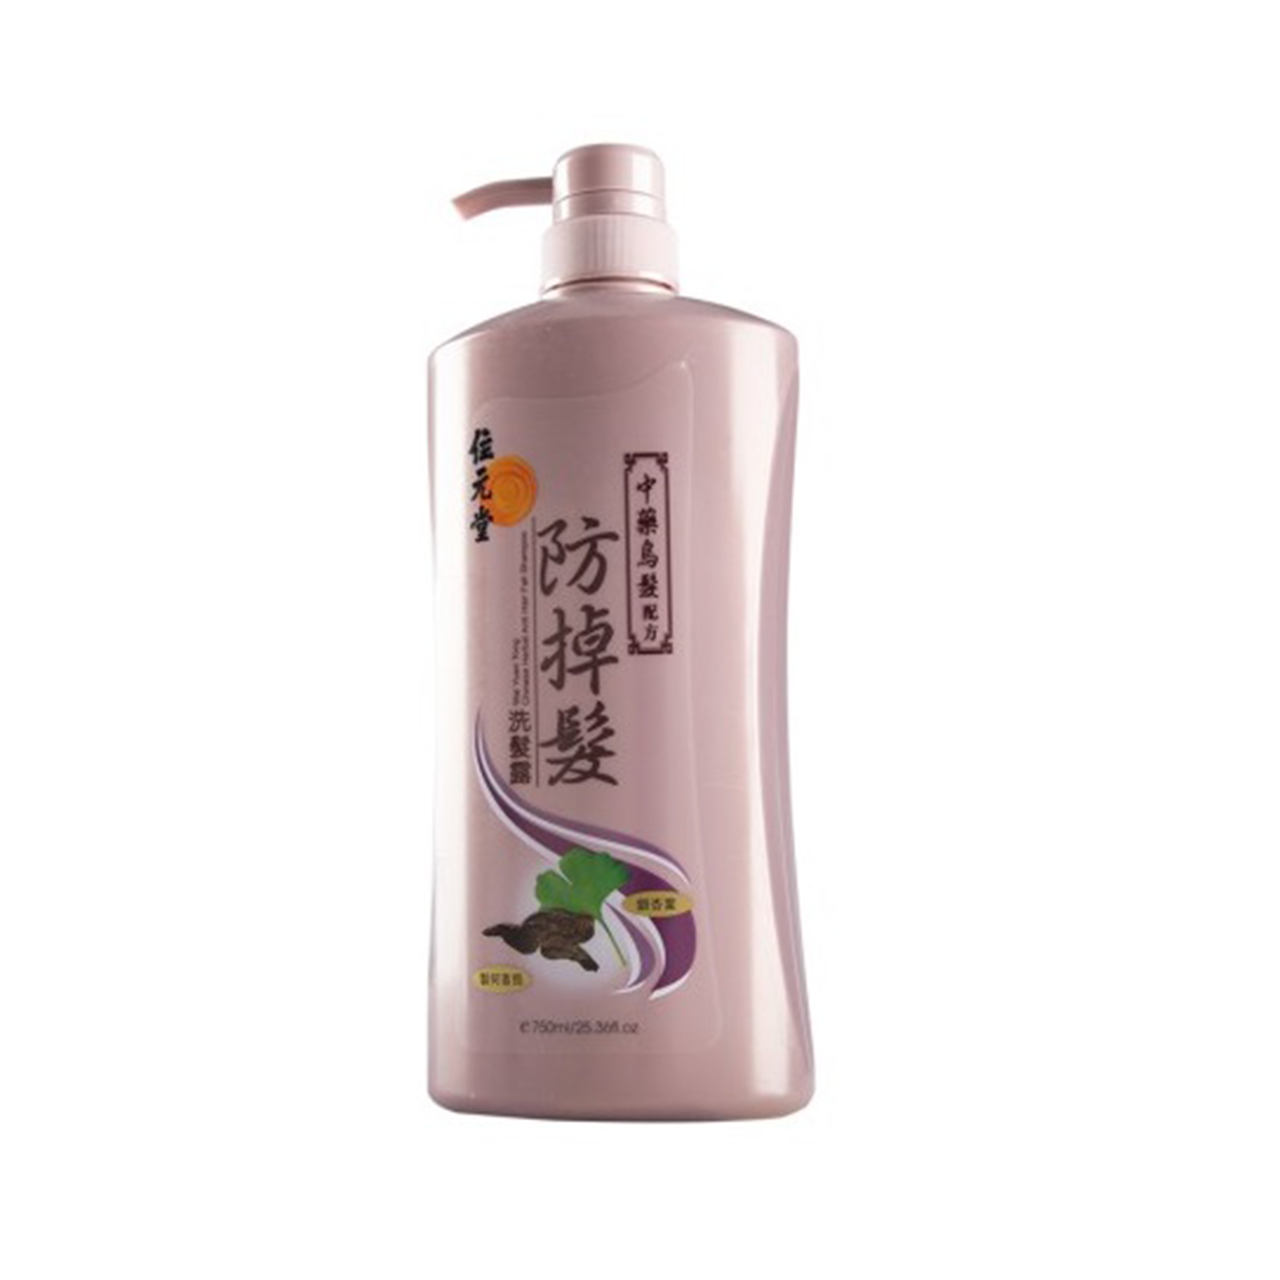 Wai Yuen Tong Chinese Herbal Anti Hair Fall Shampoo Hair Darkening Formula 750ML